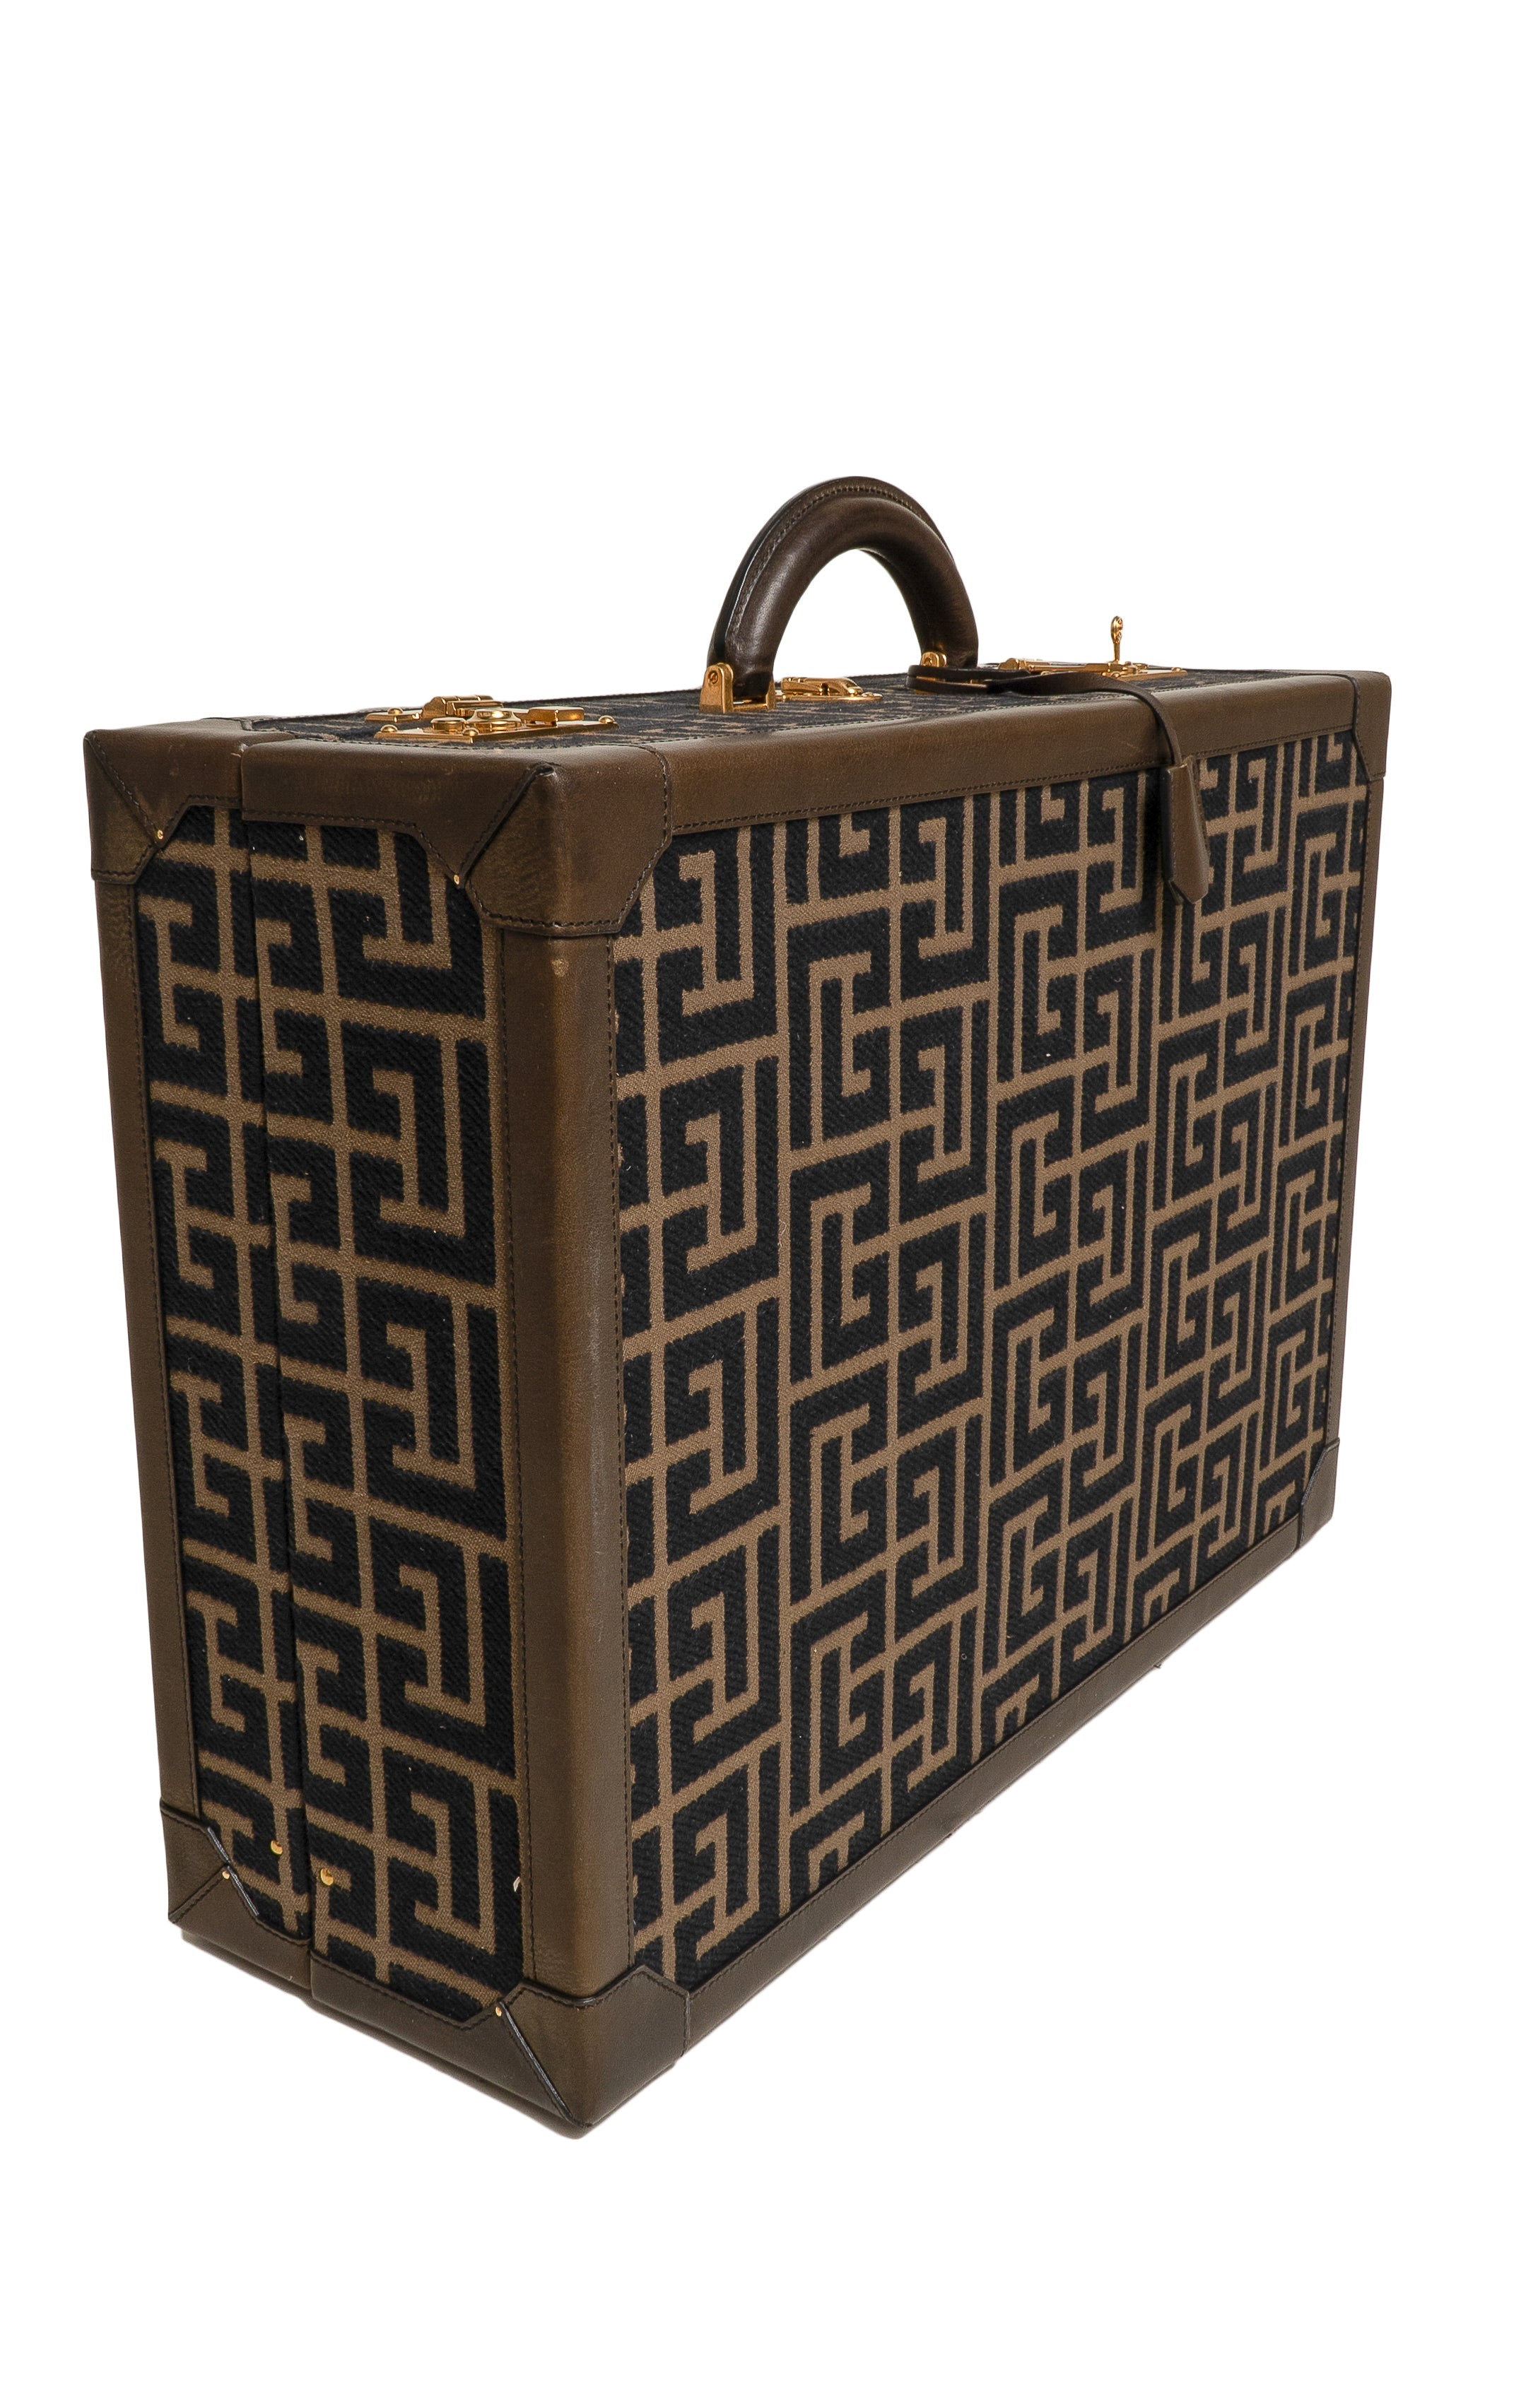 BALMAIN (RARE) Luggage Size: 23.5" x 8" x 16.75"; 2.25" drop handle